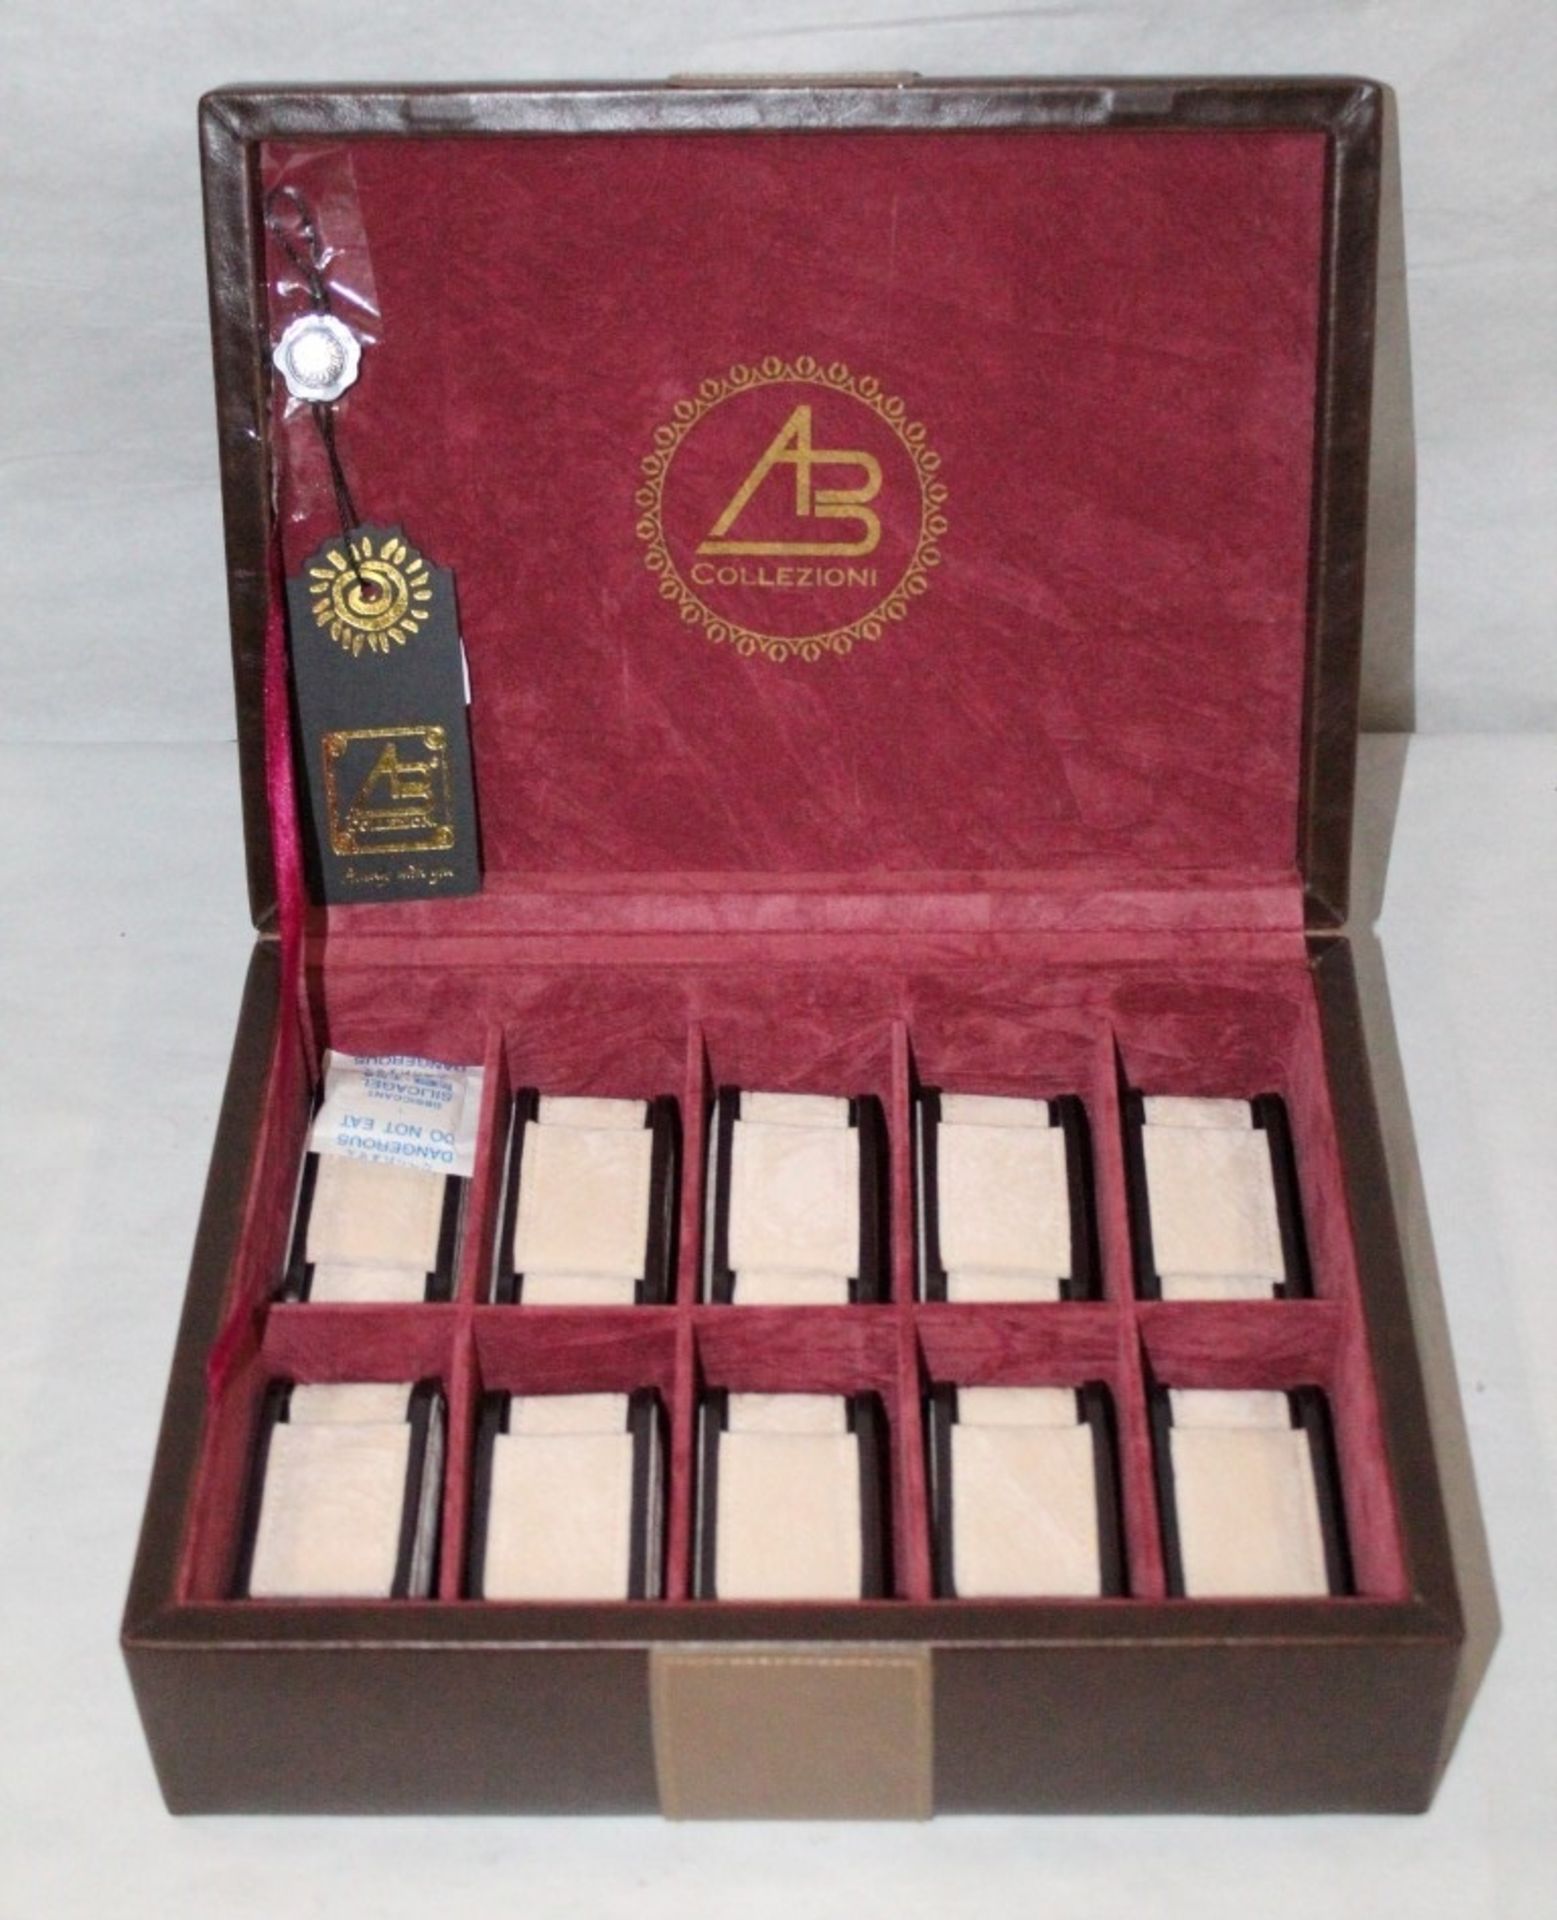 1 x "AB Collezioni" Italian Luxury Brown Leather Watch Case (34040) - Ref LT129 - Dimensions: